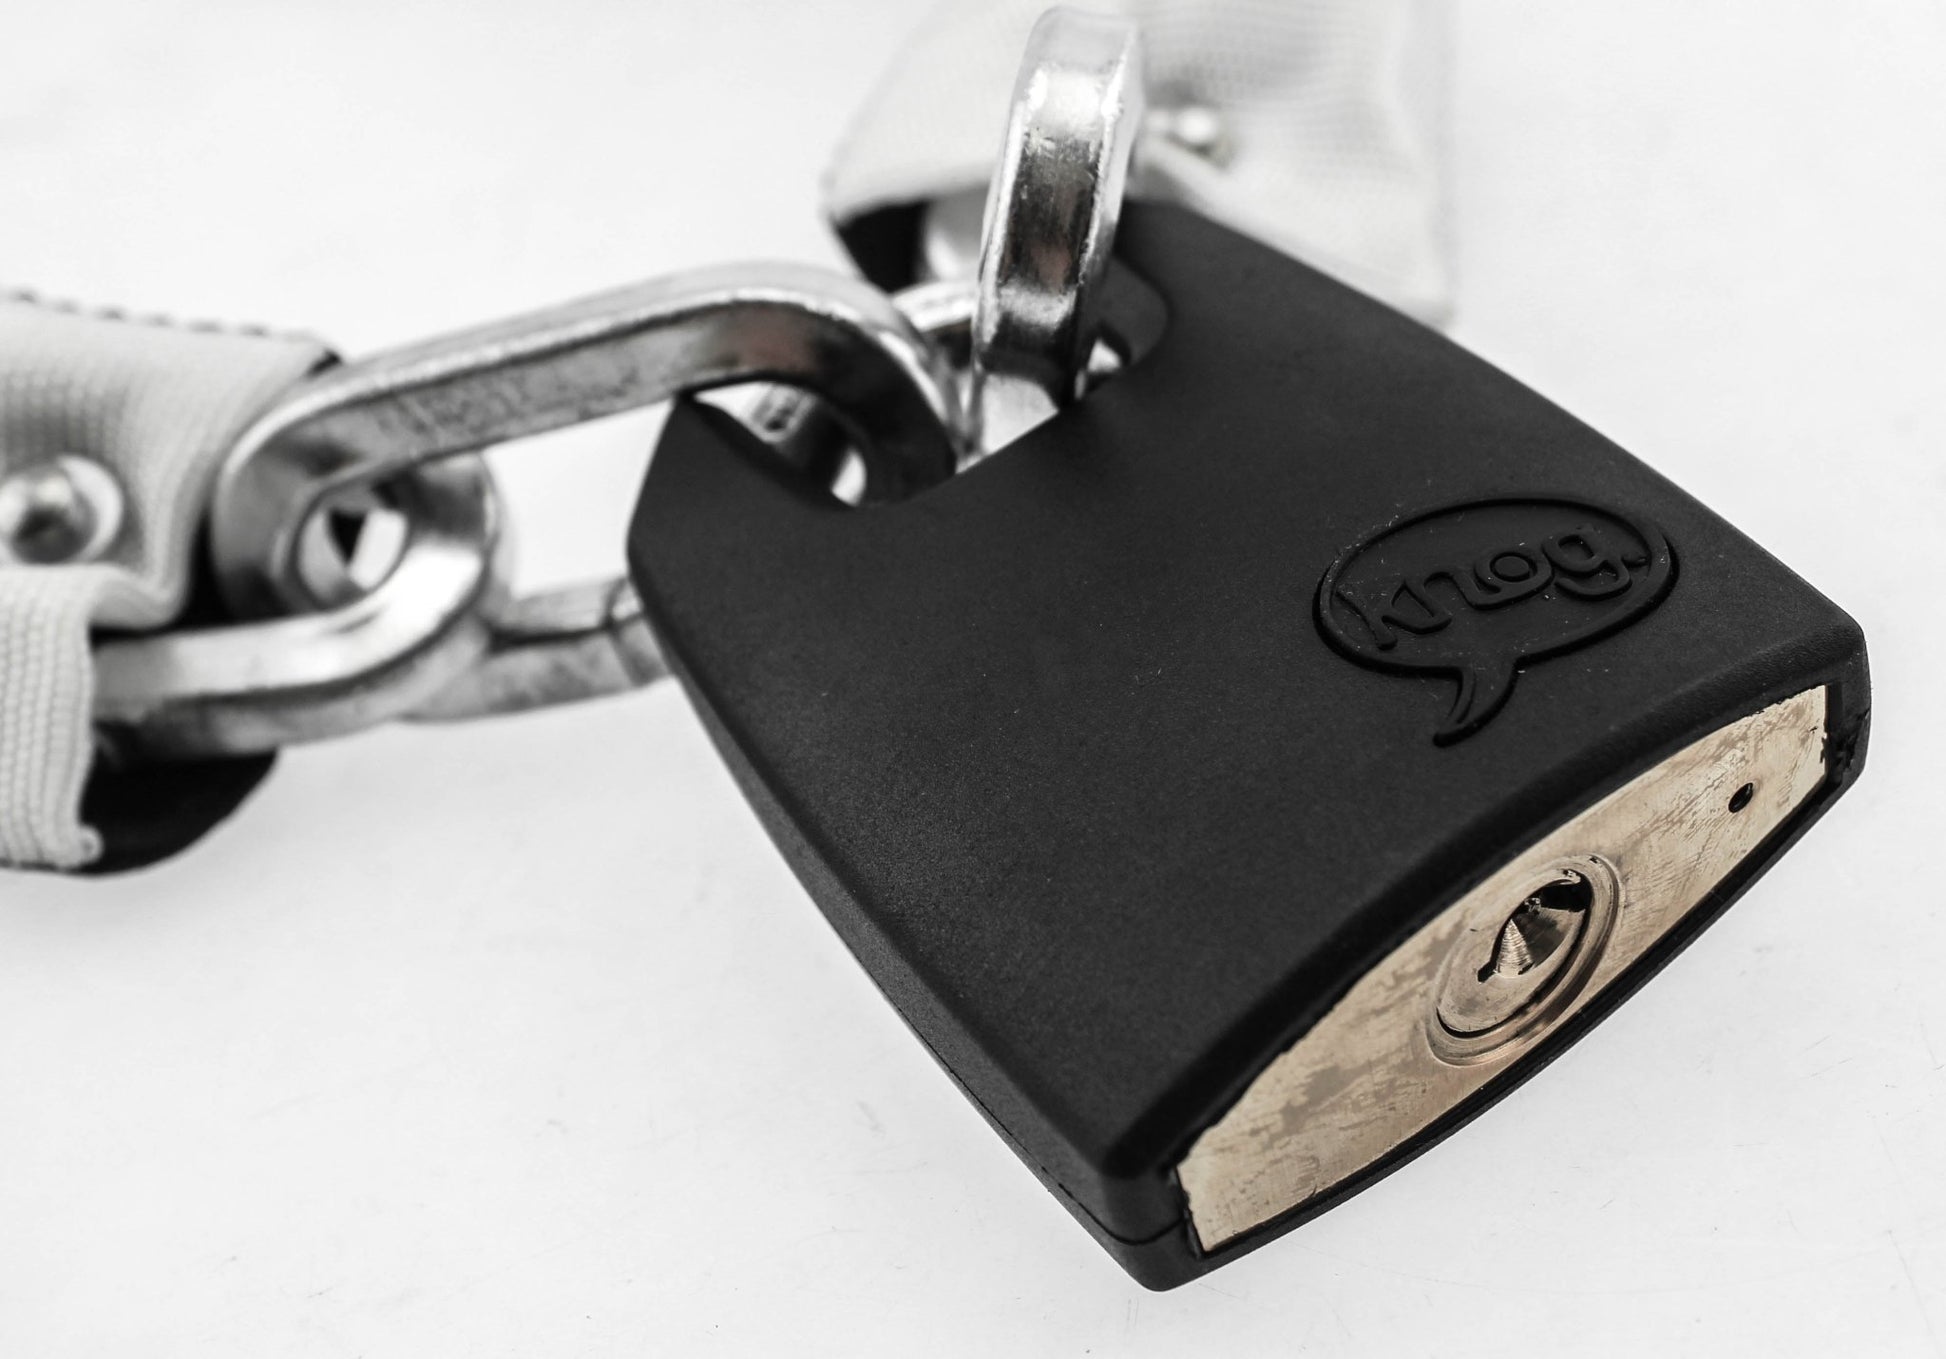 Knog "The Straight Jacket Fatty" 800mm Fat Chain Lock Steel Nylon Black/White New - Random Bike Parts